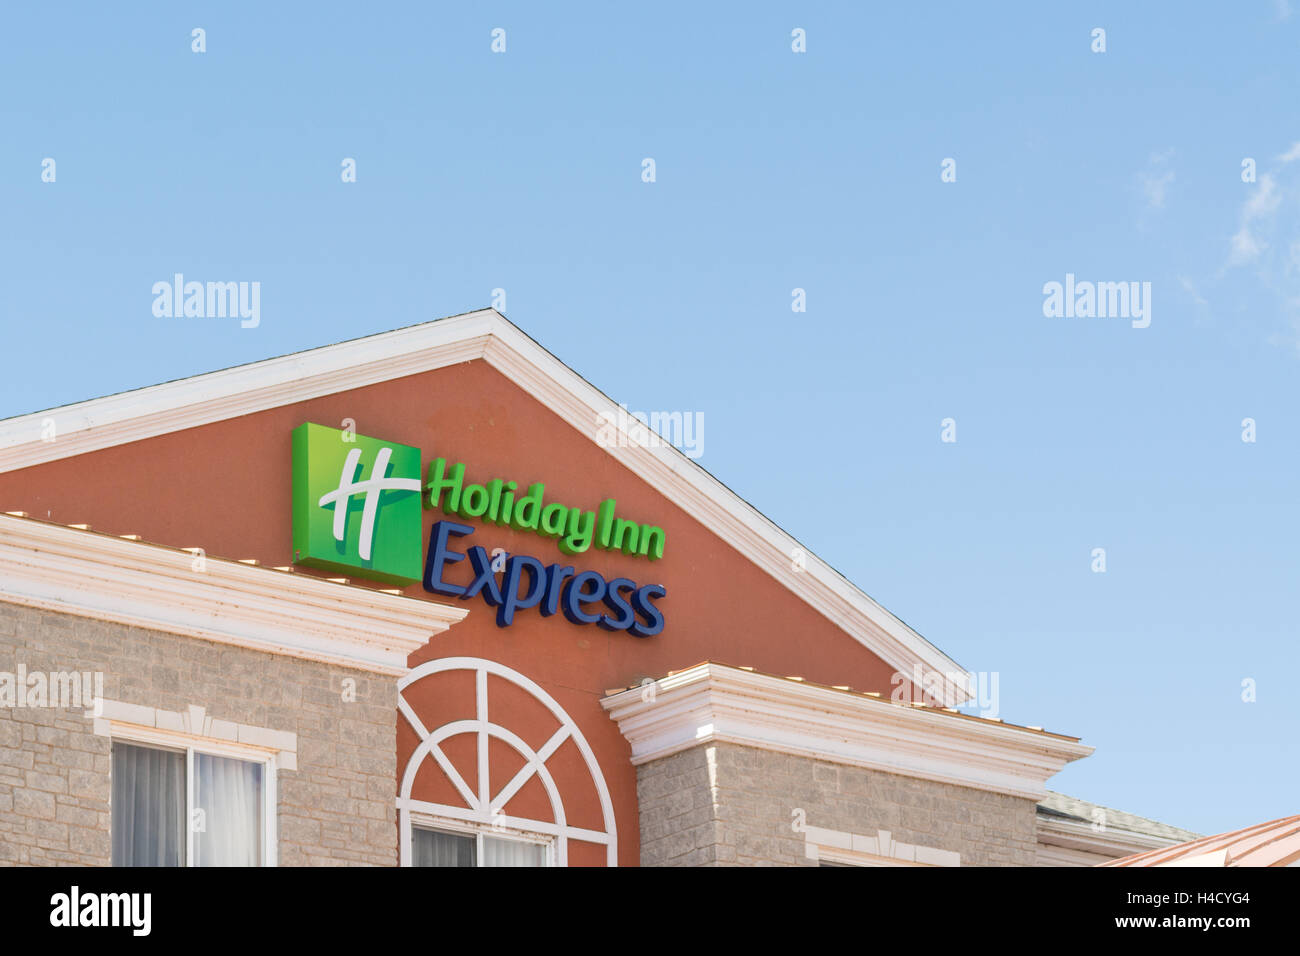 Holiday Inn Express Signe, 1000 Islands, Gananoque, Ontario, Canada Banque D'Images